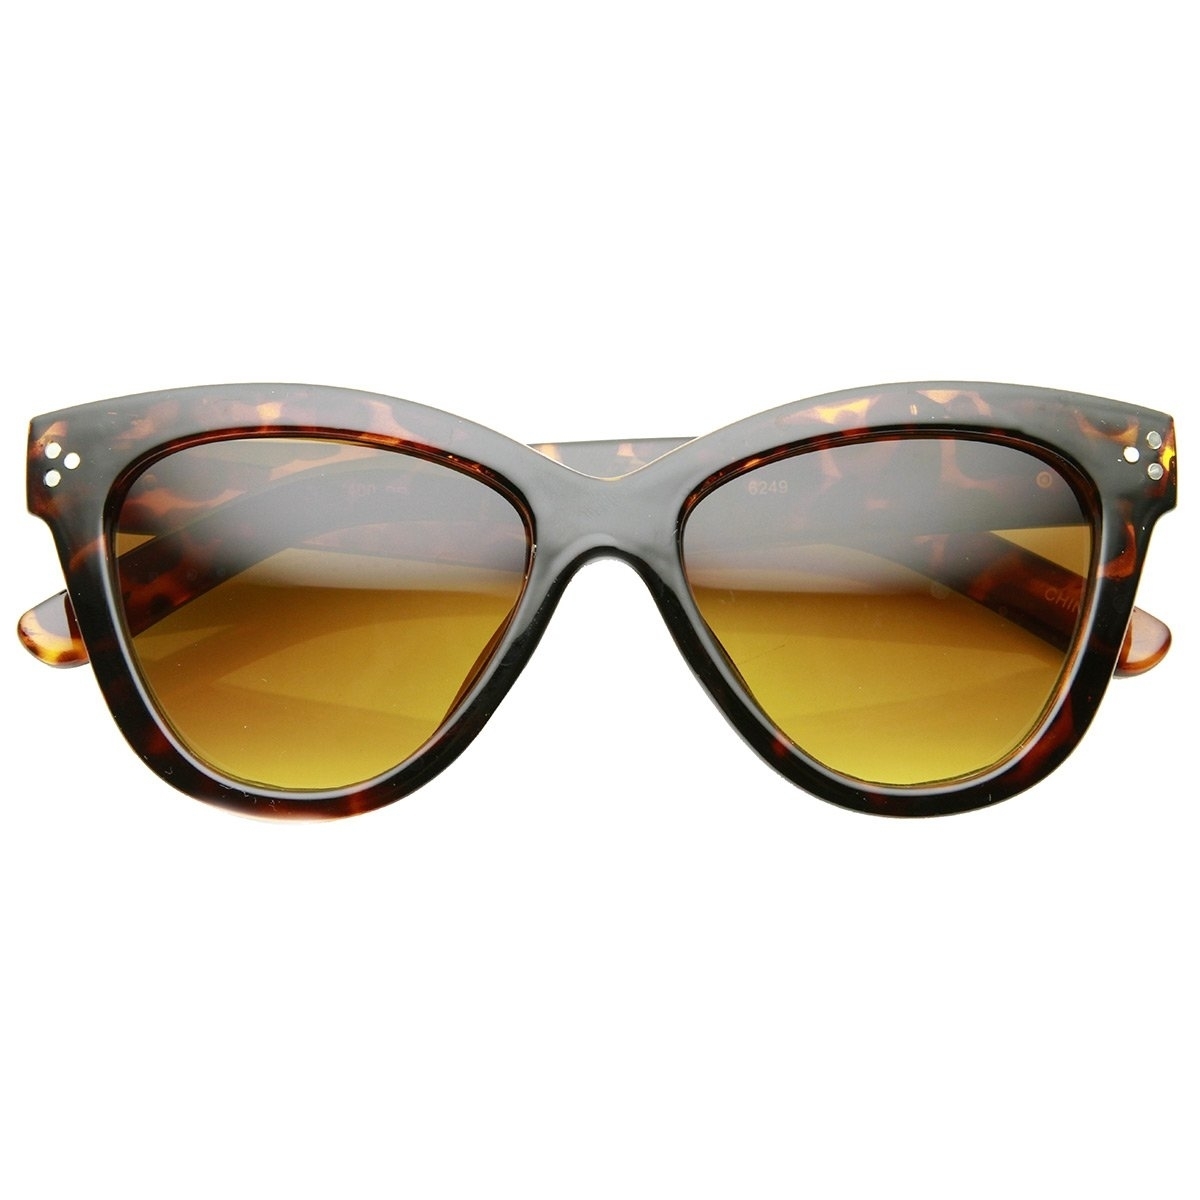 Womens Fashion Oversized Oval Bold Rim Butterfly Cat Eye Sunglasses - Tortoise Amber